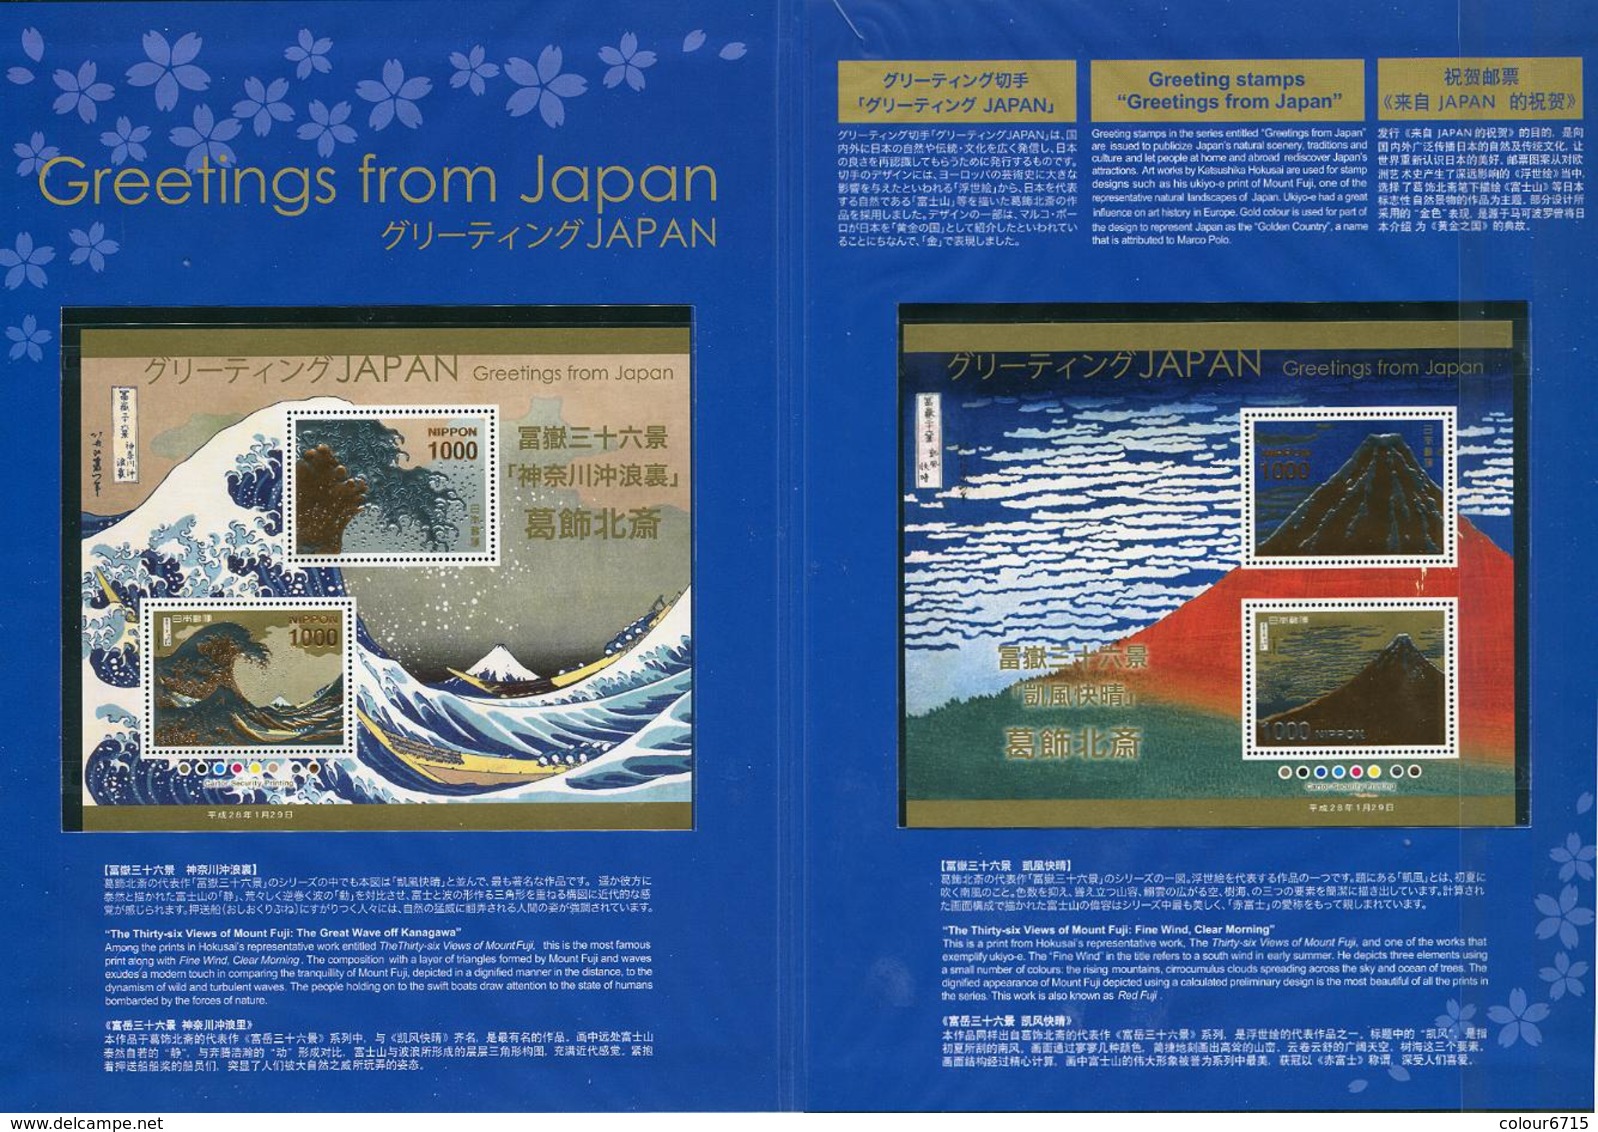 Unused stamps - Japan 2016 Greetings from Japan/Fuji Mountian